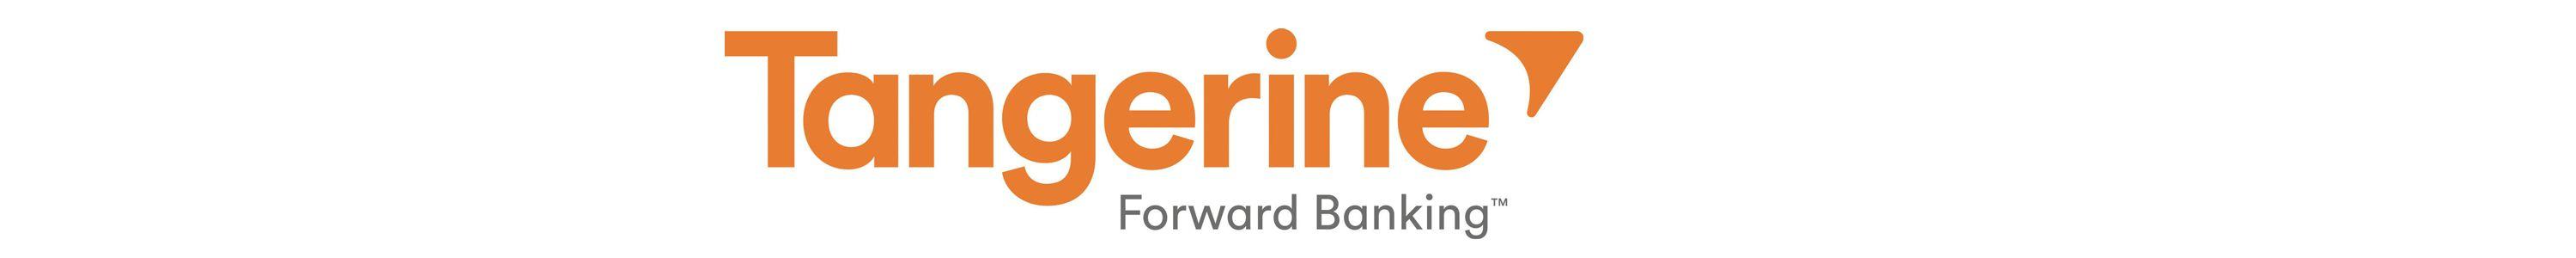 Tangerine Logo - Tangerine - Microsoft Enterprise